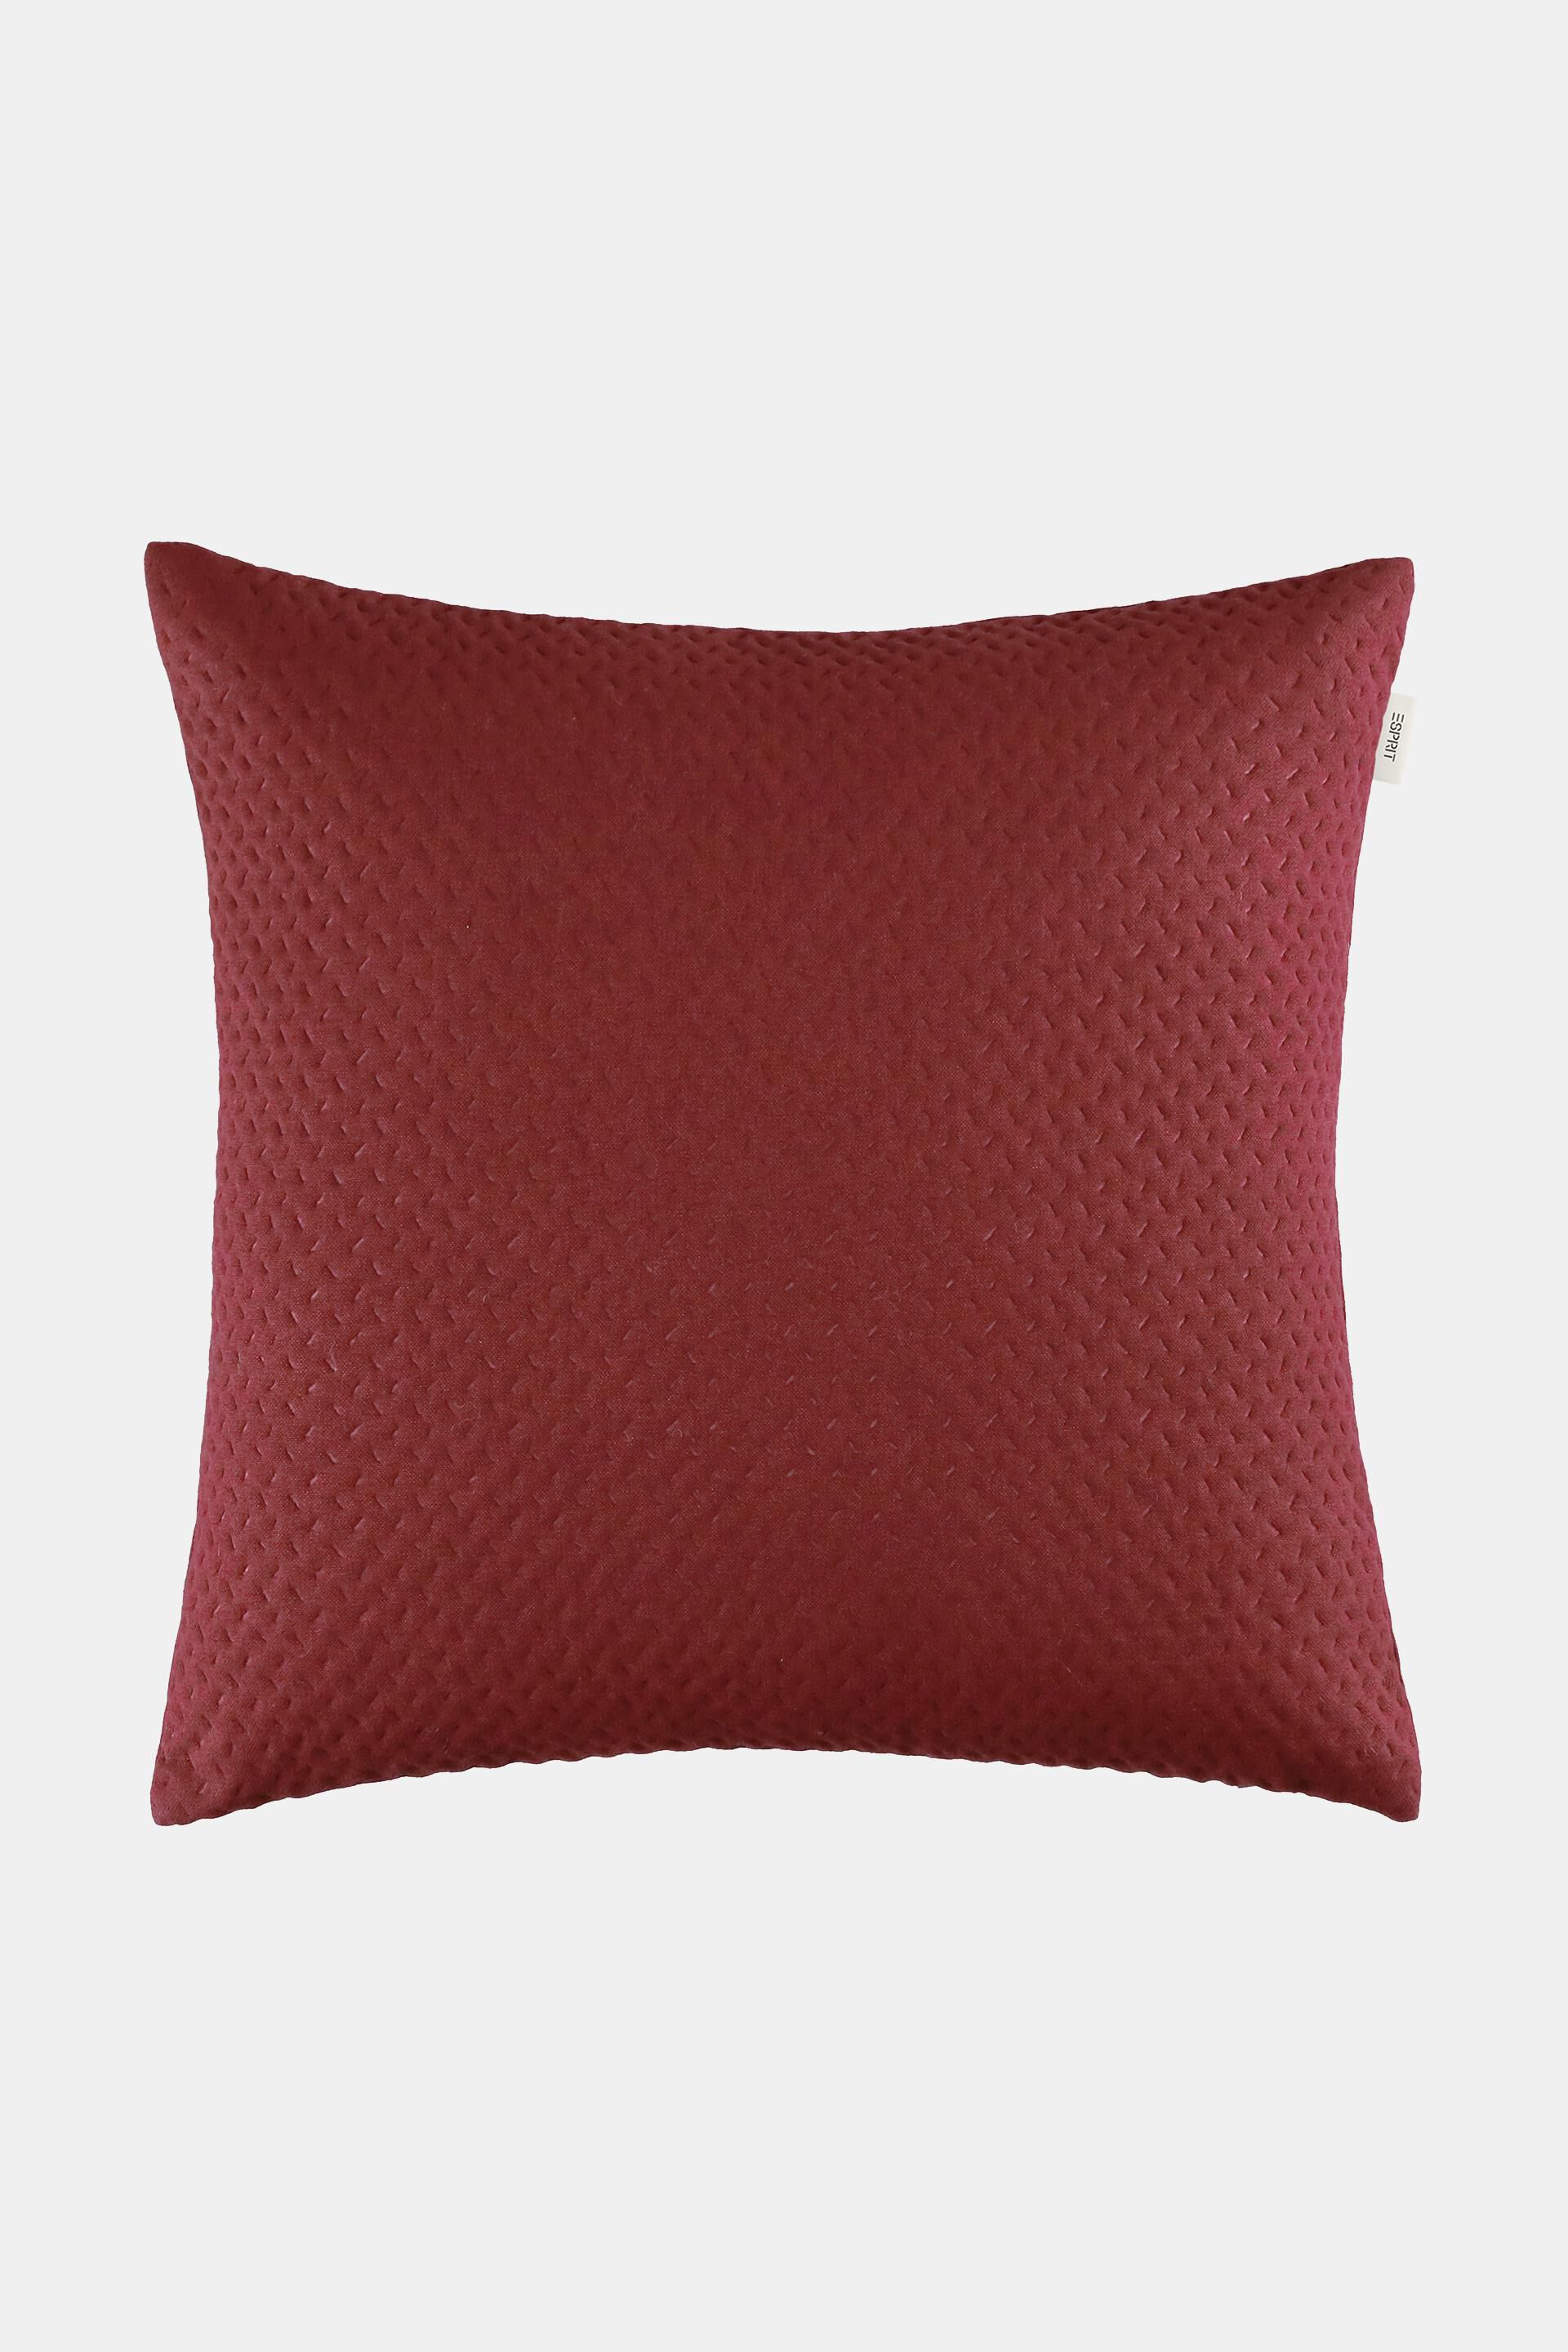 Esprit decorative Woven cushion cover